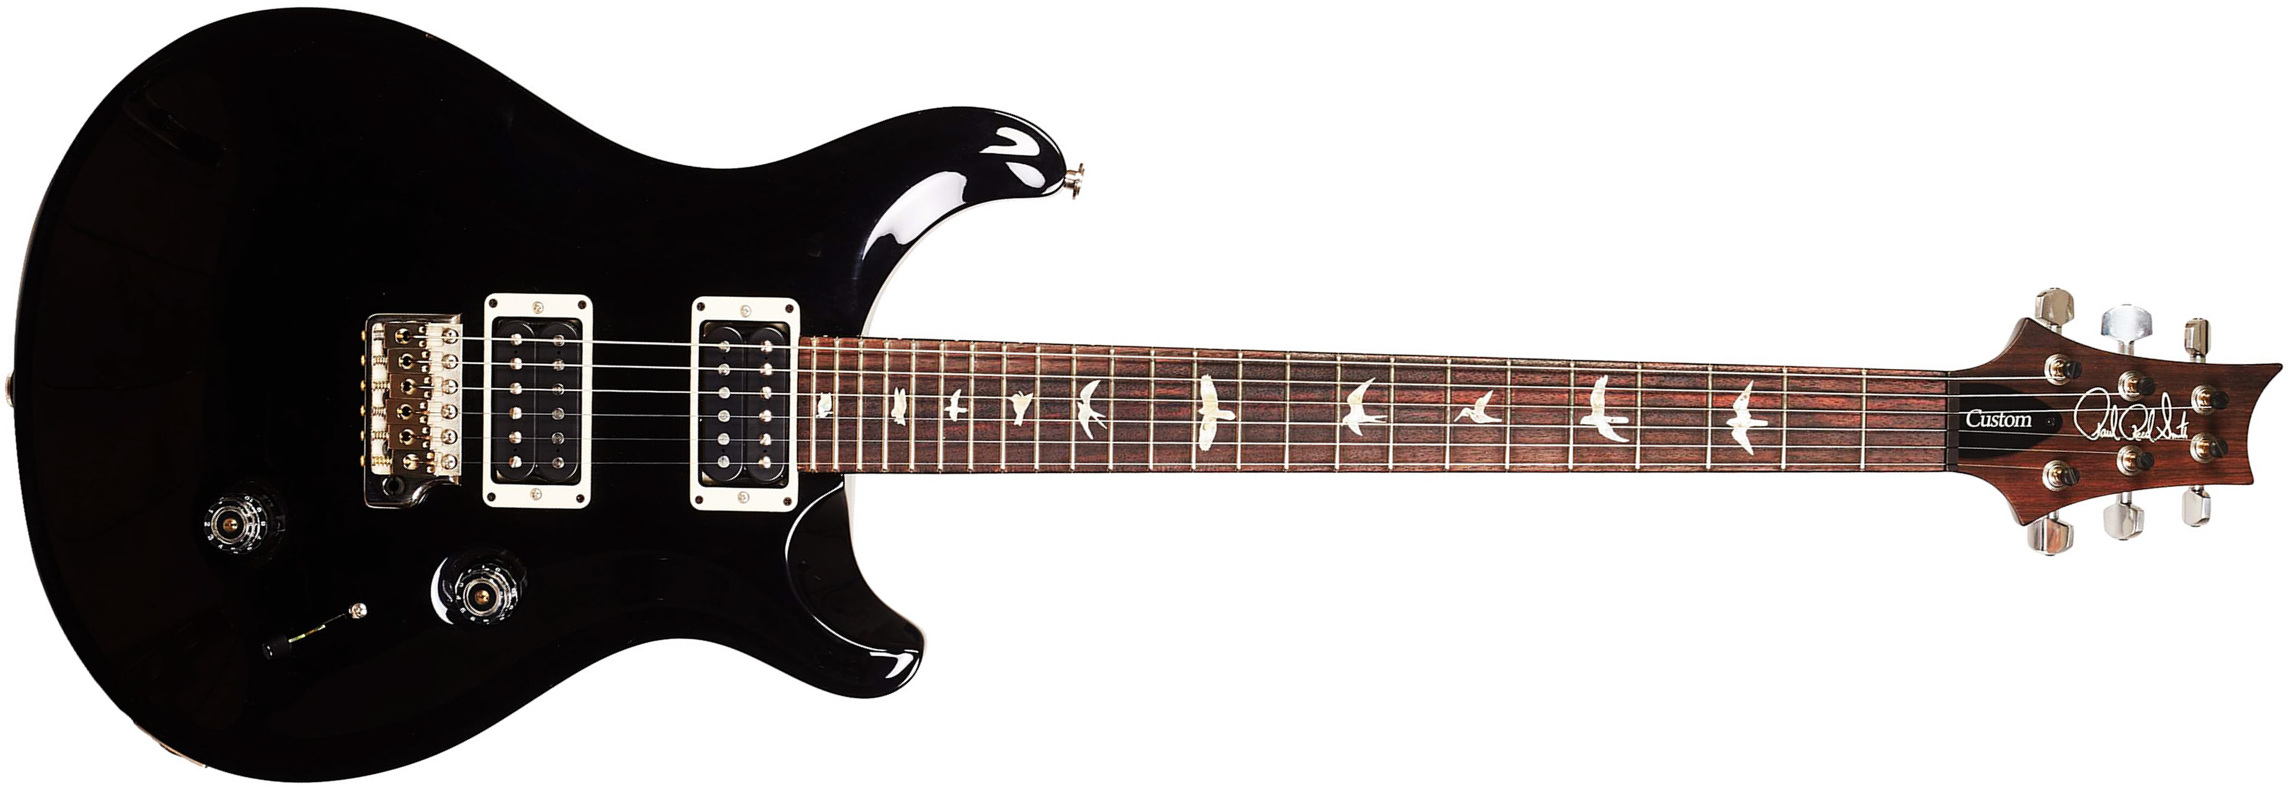 Prs Custom 24 Usa Hh Trem Rw - Black - Guitarra eléctrica de doble corte. - Main picture